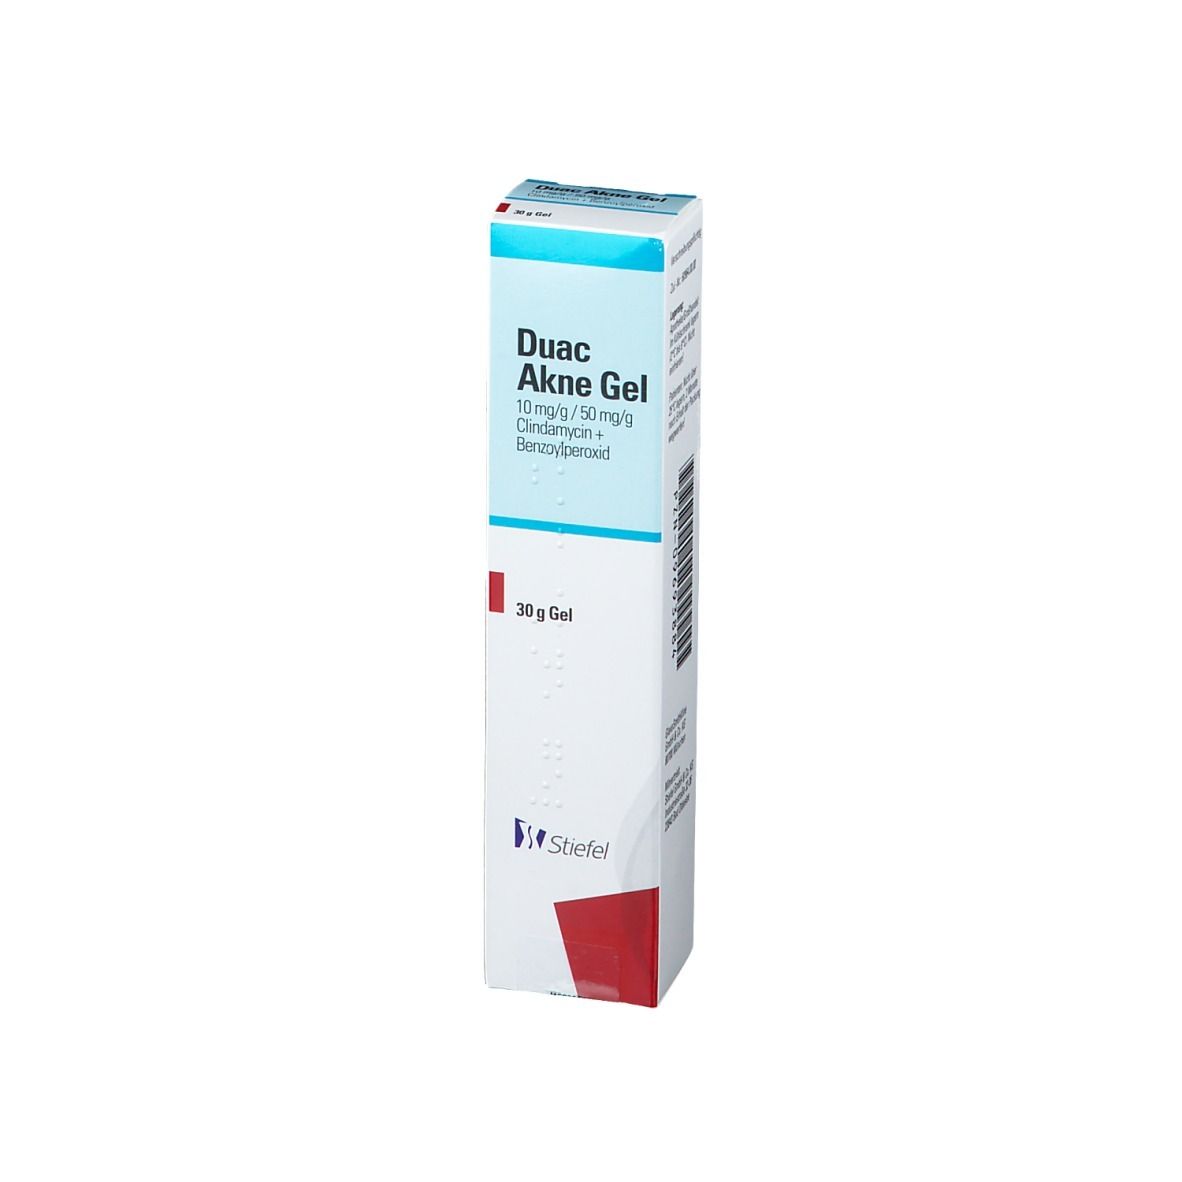 Duac Akne Gel 10 mg/g 50 mg/g